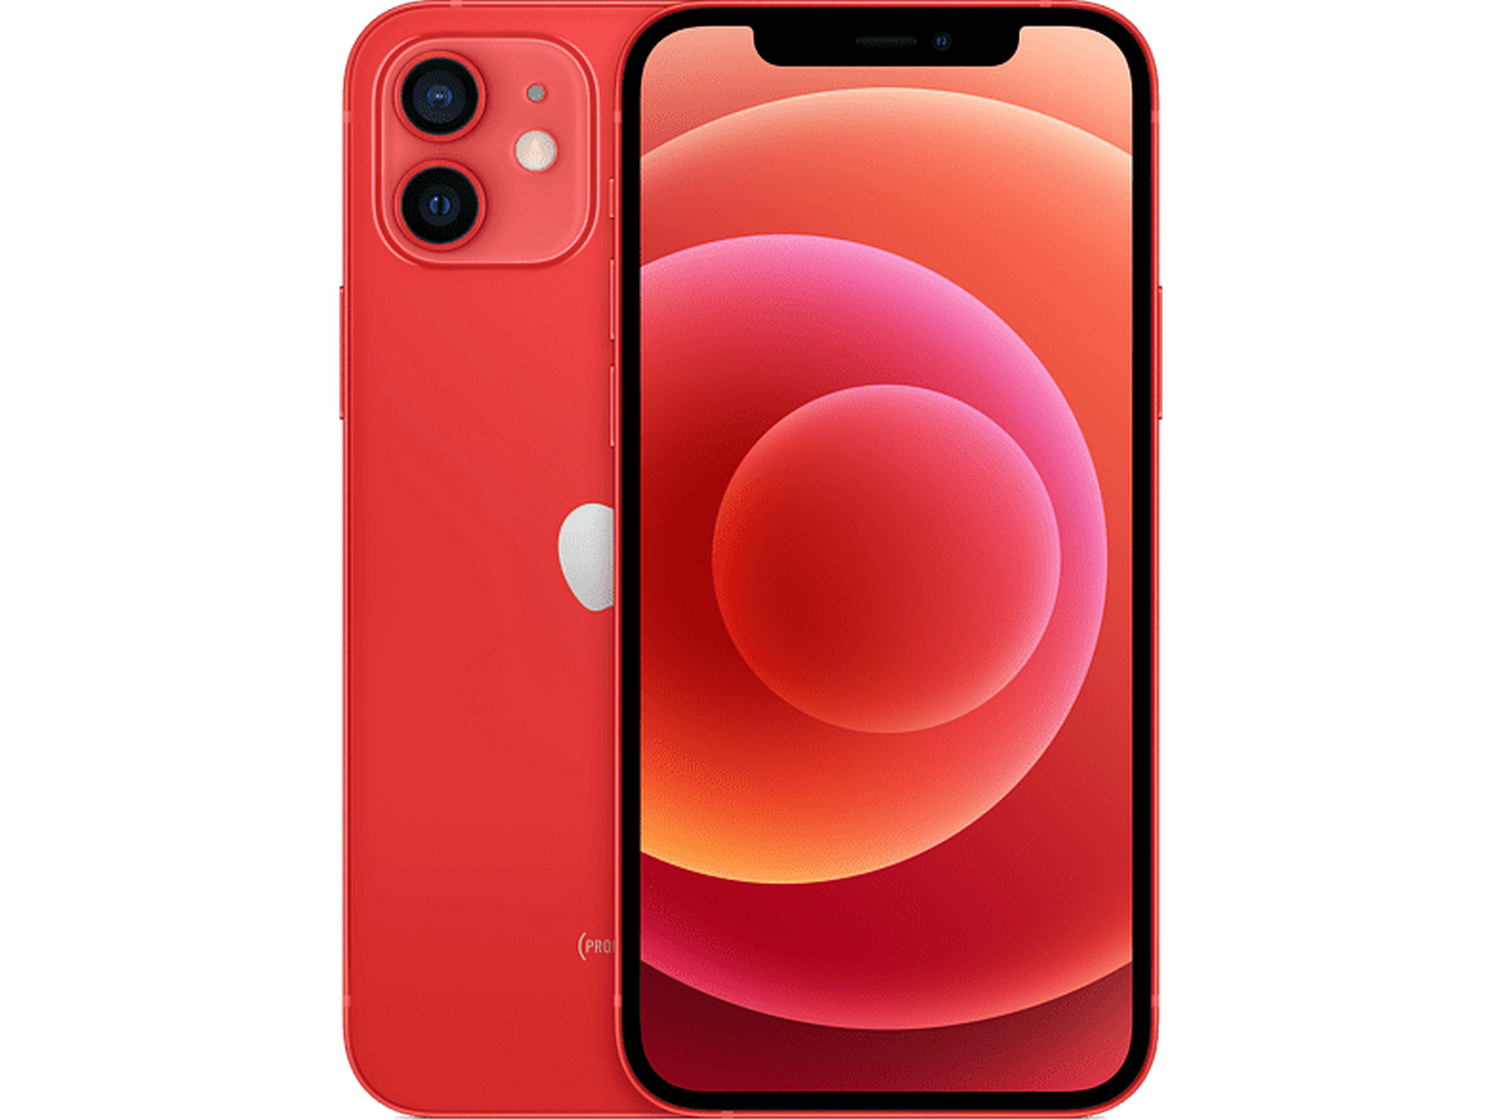 Apple Iphone 12 rojo 64 gb 5g 6.1 oled super retina xdr chip a14 bionic ios productred™ nuevo 61 64gb 14 1594 61“